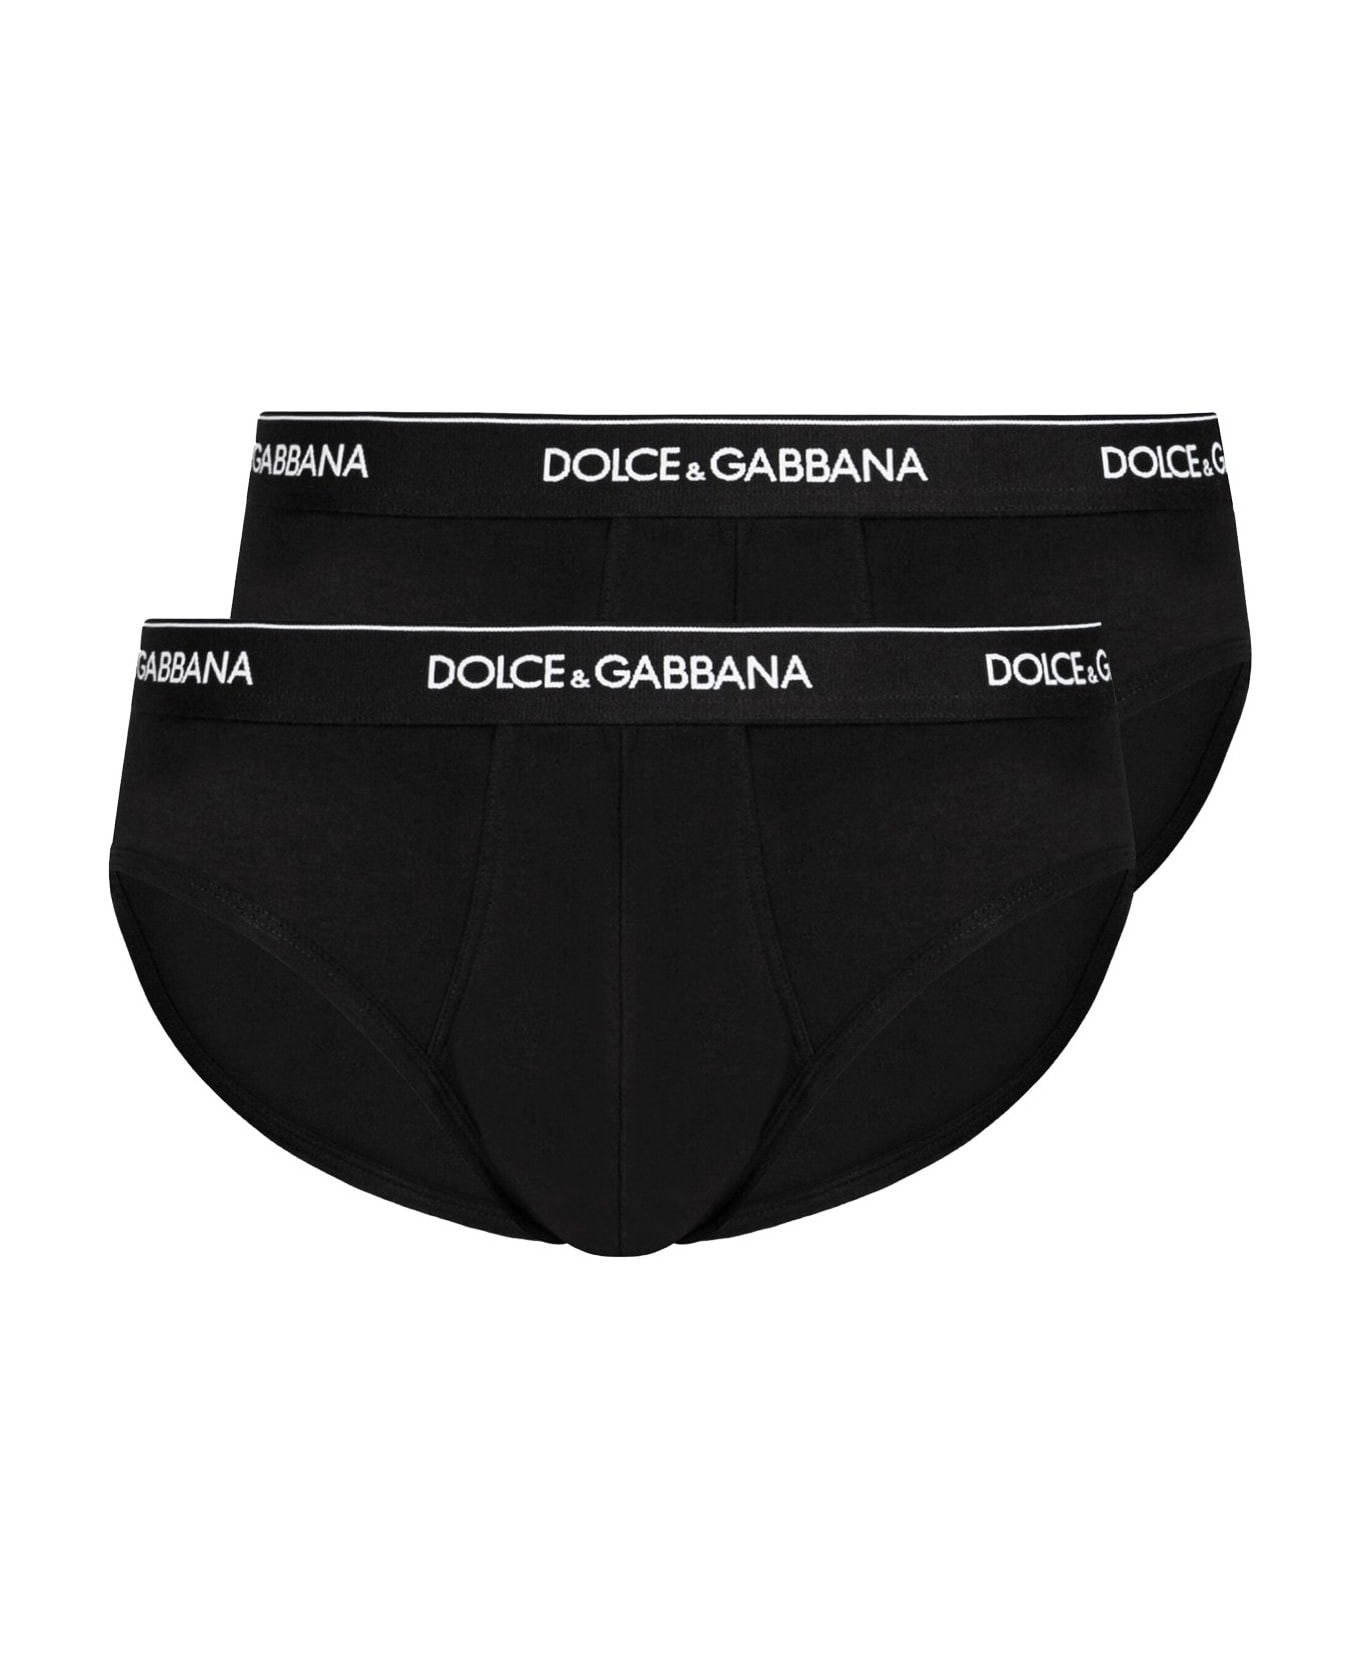 Dolce & Gabbana Pack Containing Two Brando Briefs - Black